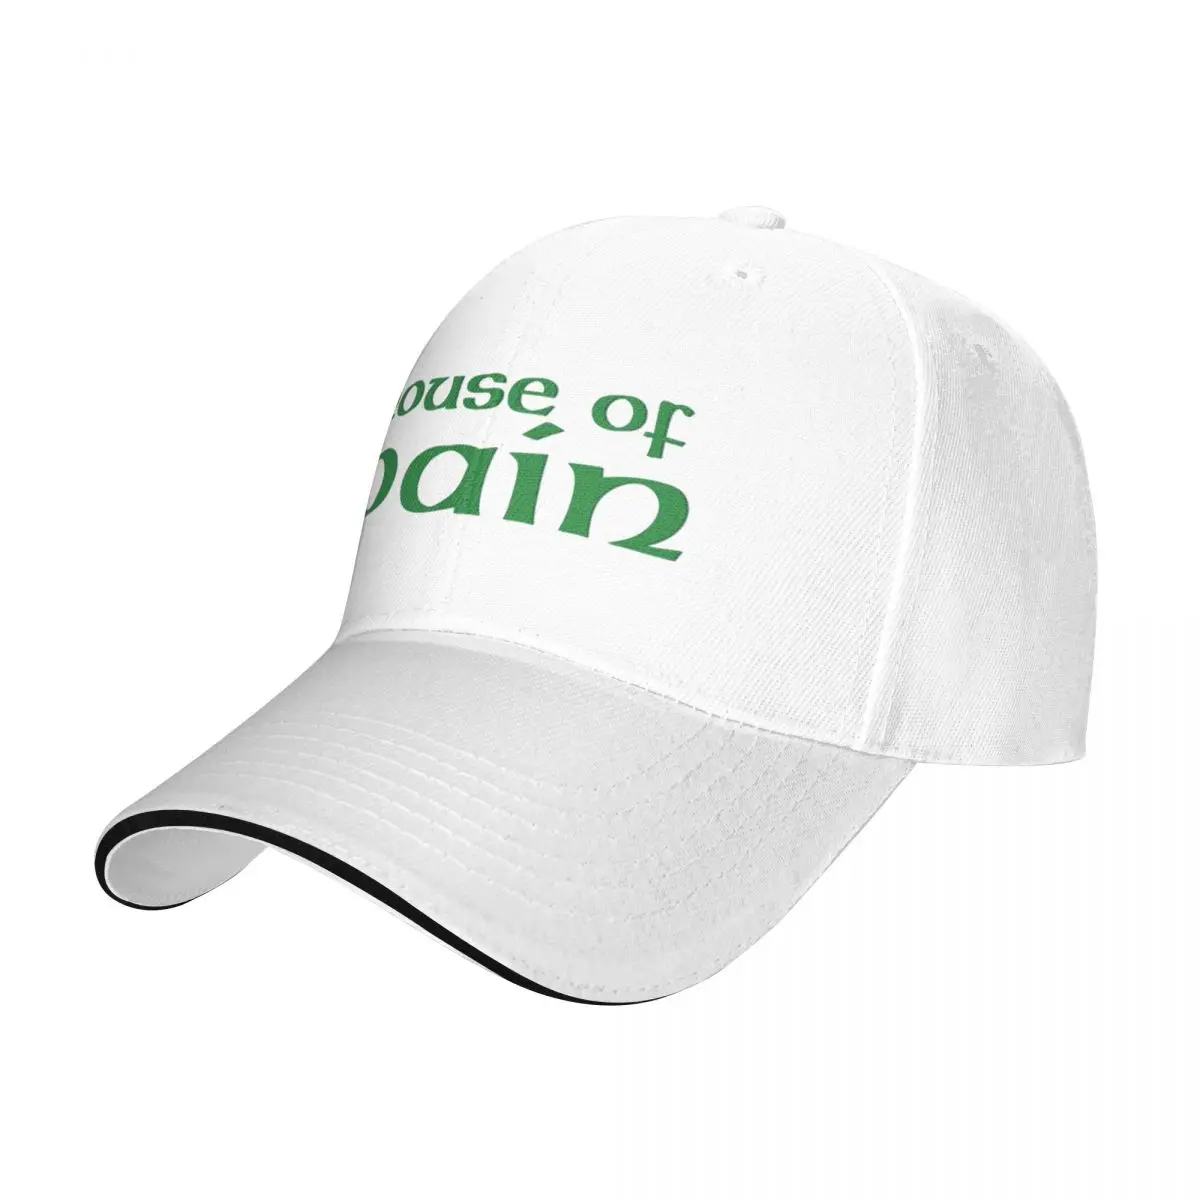 https://ae01.alicdn.com/kf/S0483d30edc2c4100abc52e9a1dcc0bccY/House-of-Pain-Orignal-Old-School-logo-Cap-baseball-cap-fishing-hat-funny-hat-Women-hat.jpg